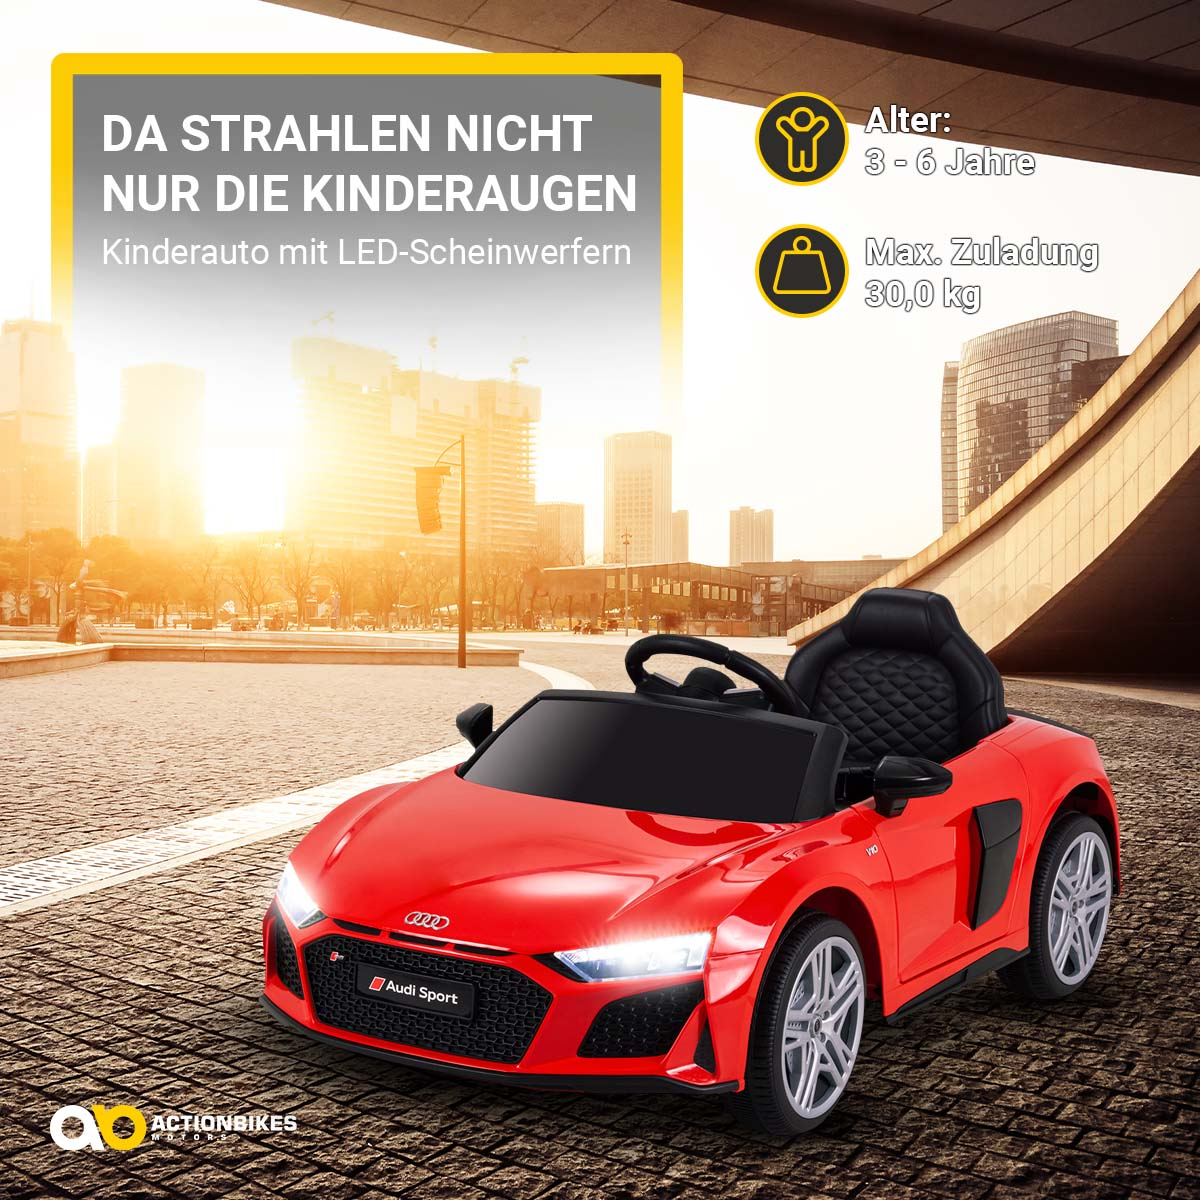 ACTIONBIKES MOTORS Spyder R8 4S Elektroauto Lizenziert Audi